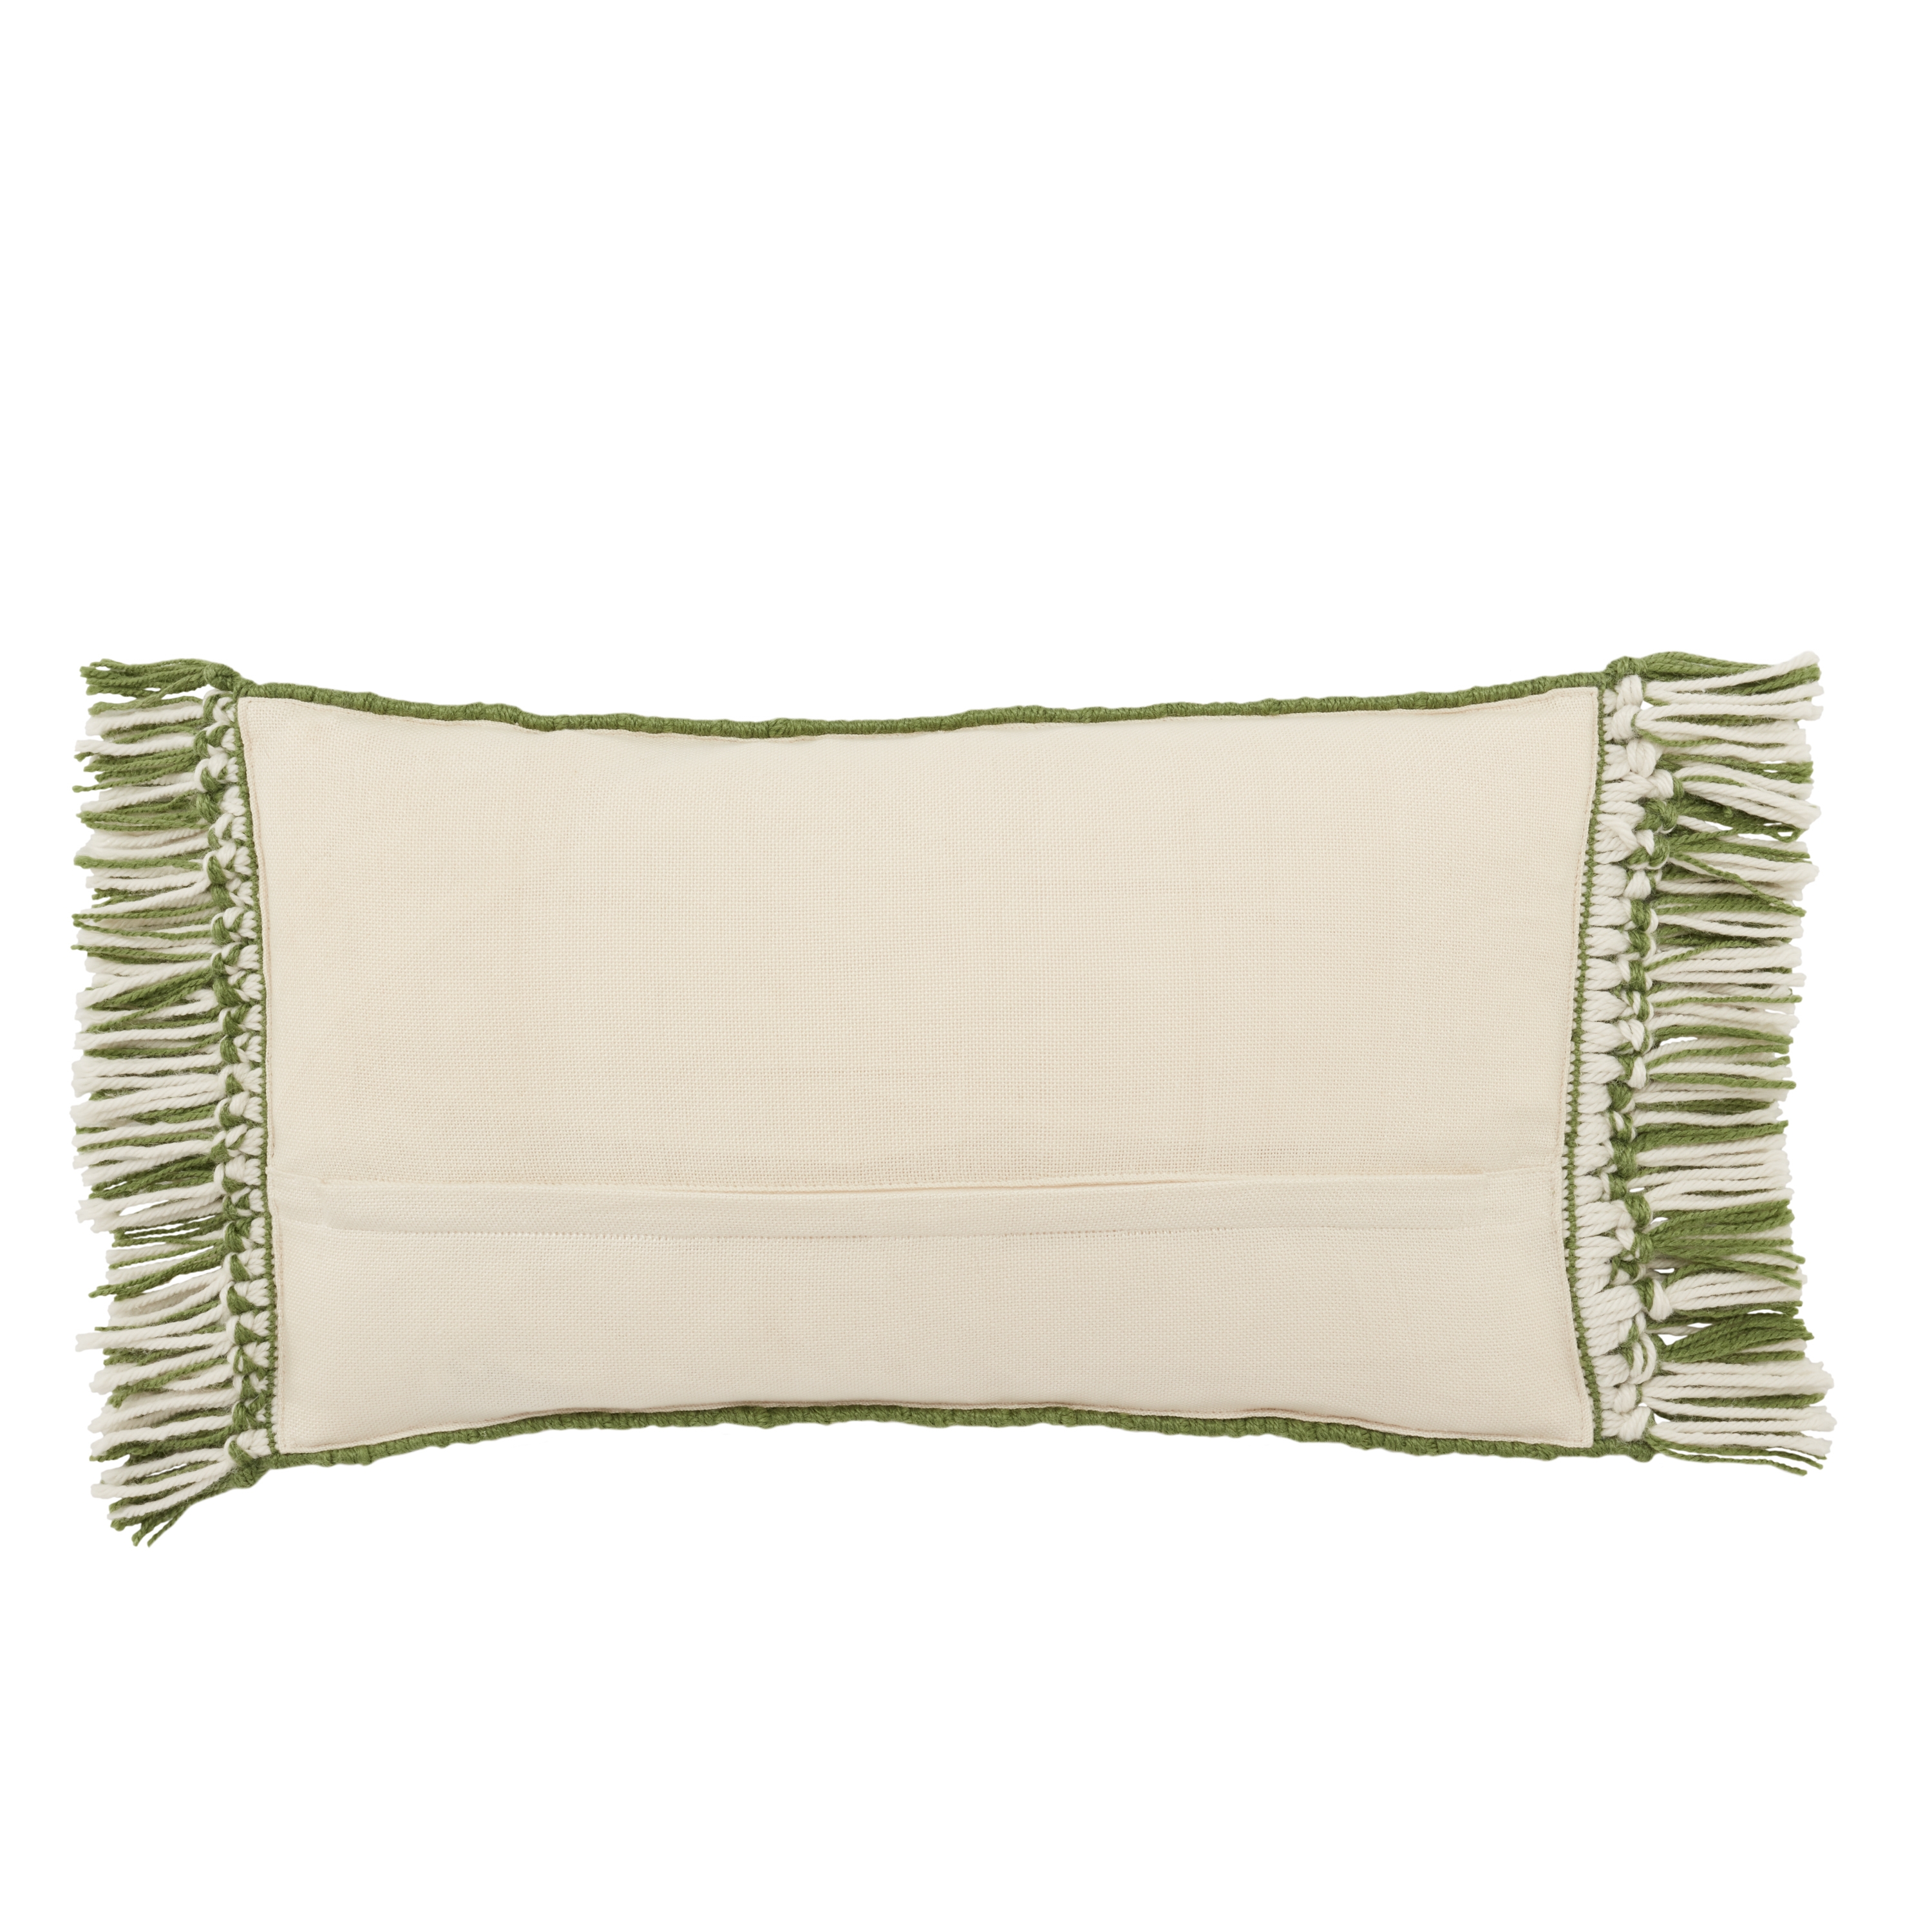 Design (US) Green 13"X21" Pillow I-O - Image 1